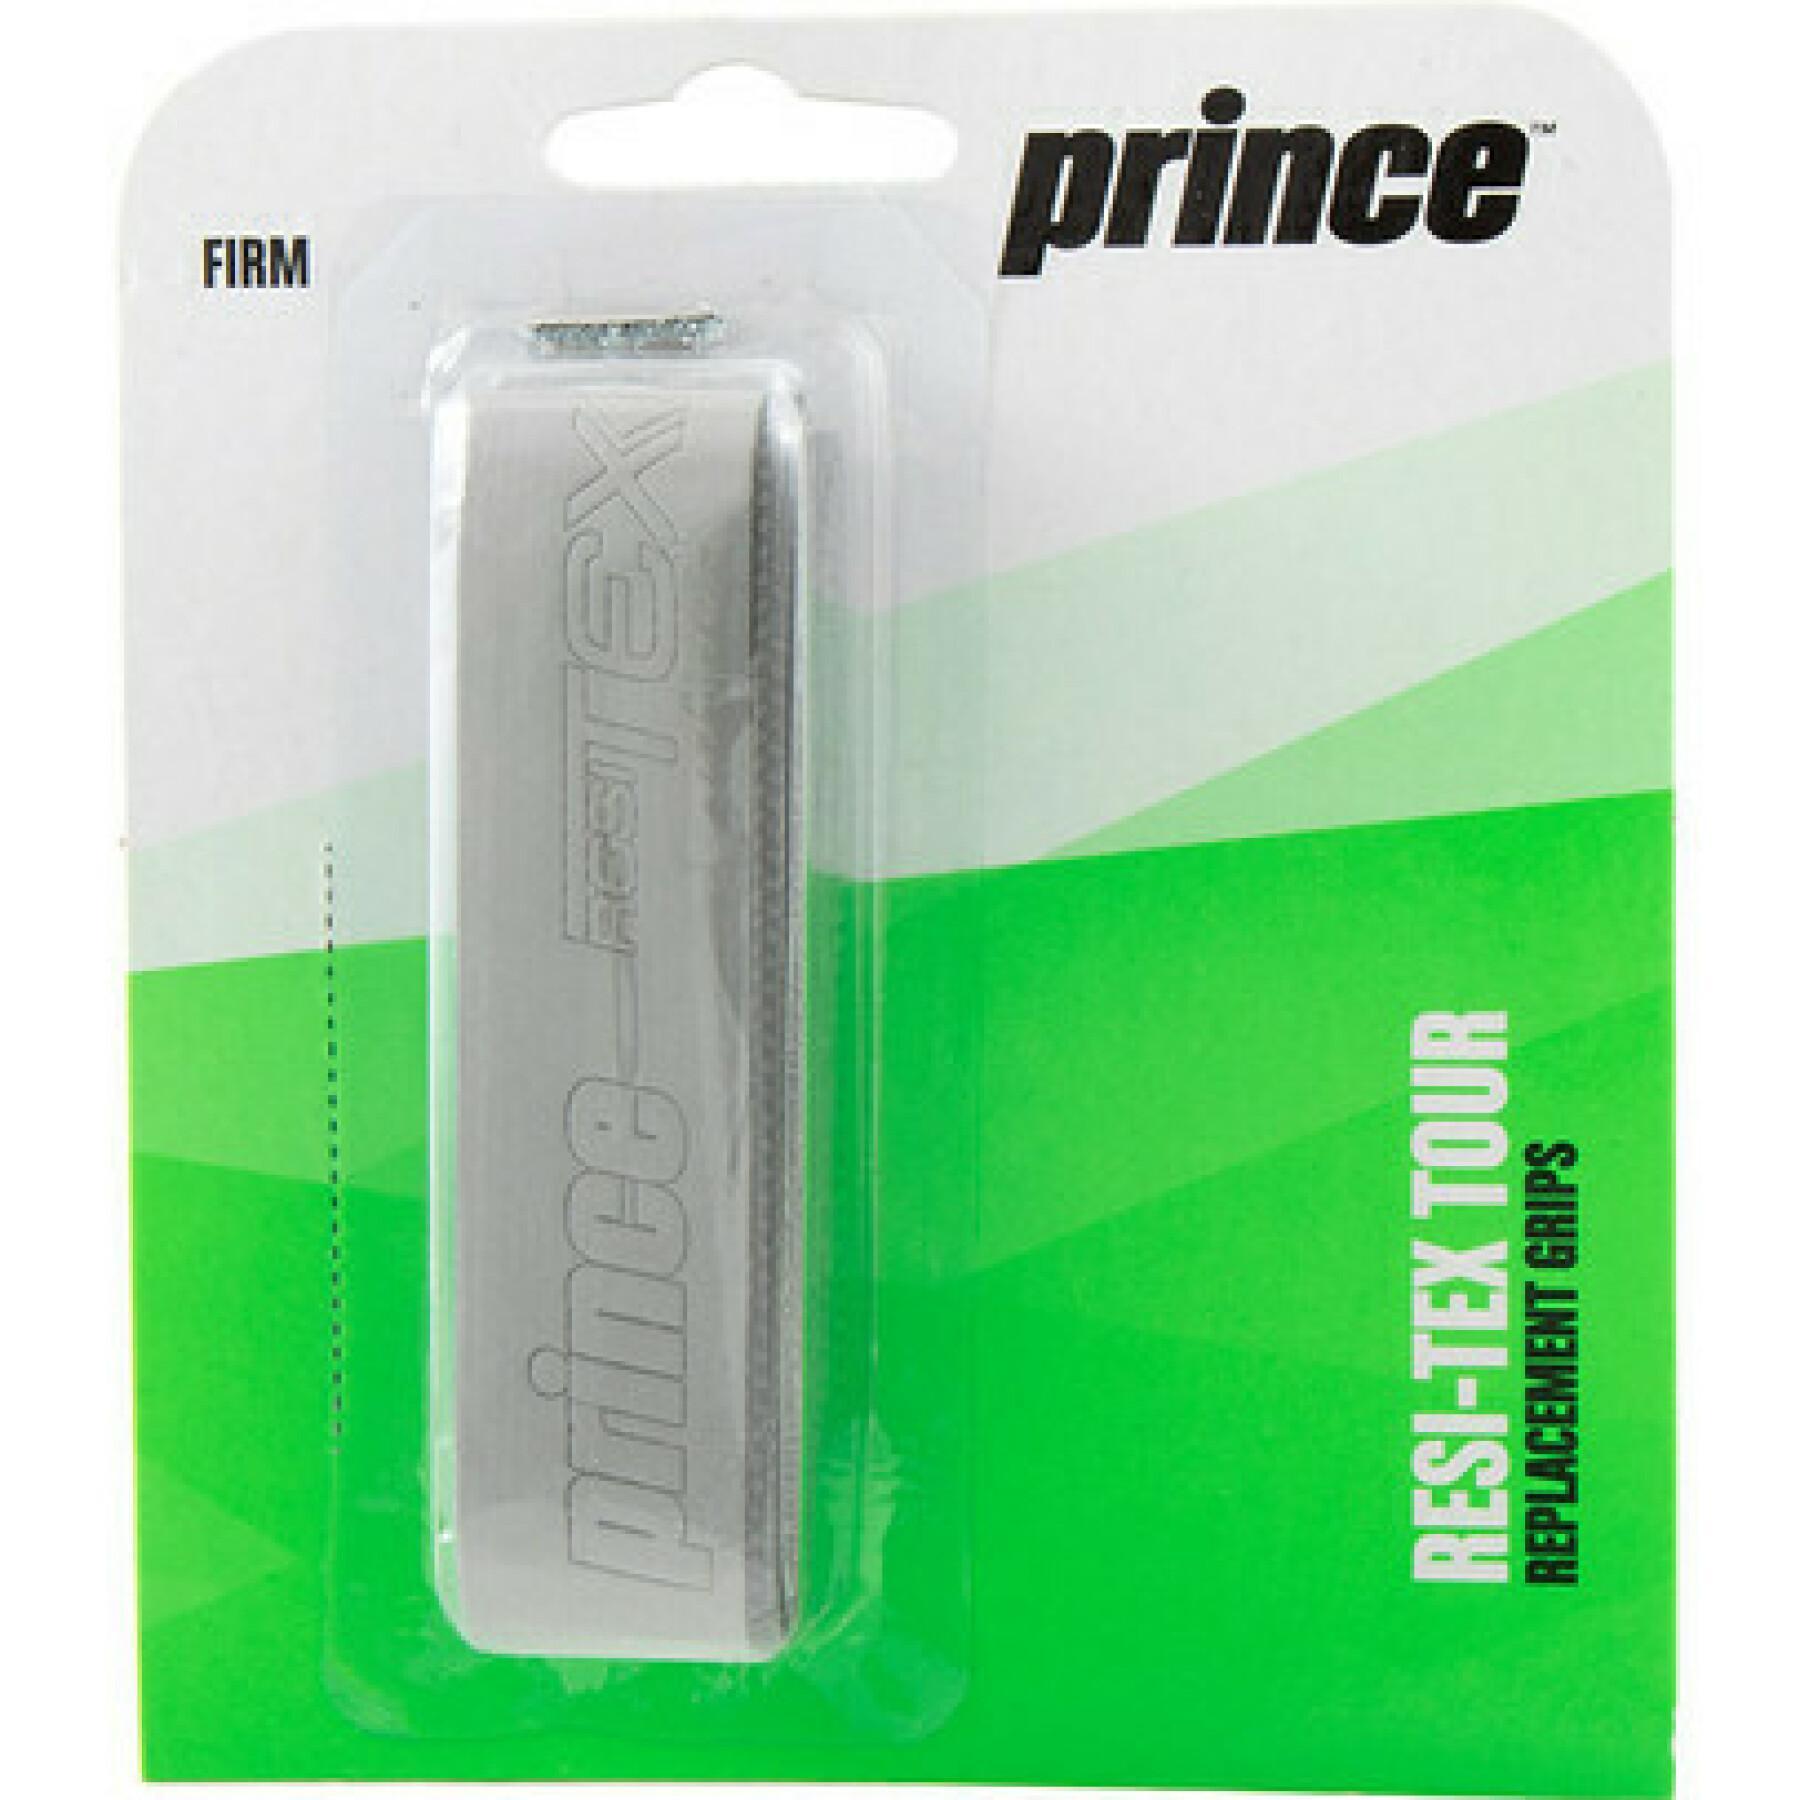 Tennis Grip Prince Resi-textour 1,80mm